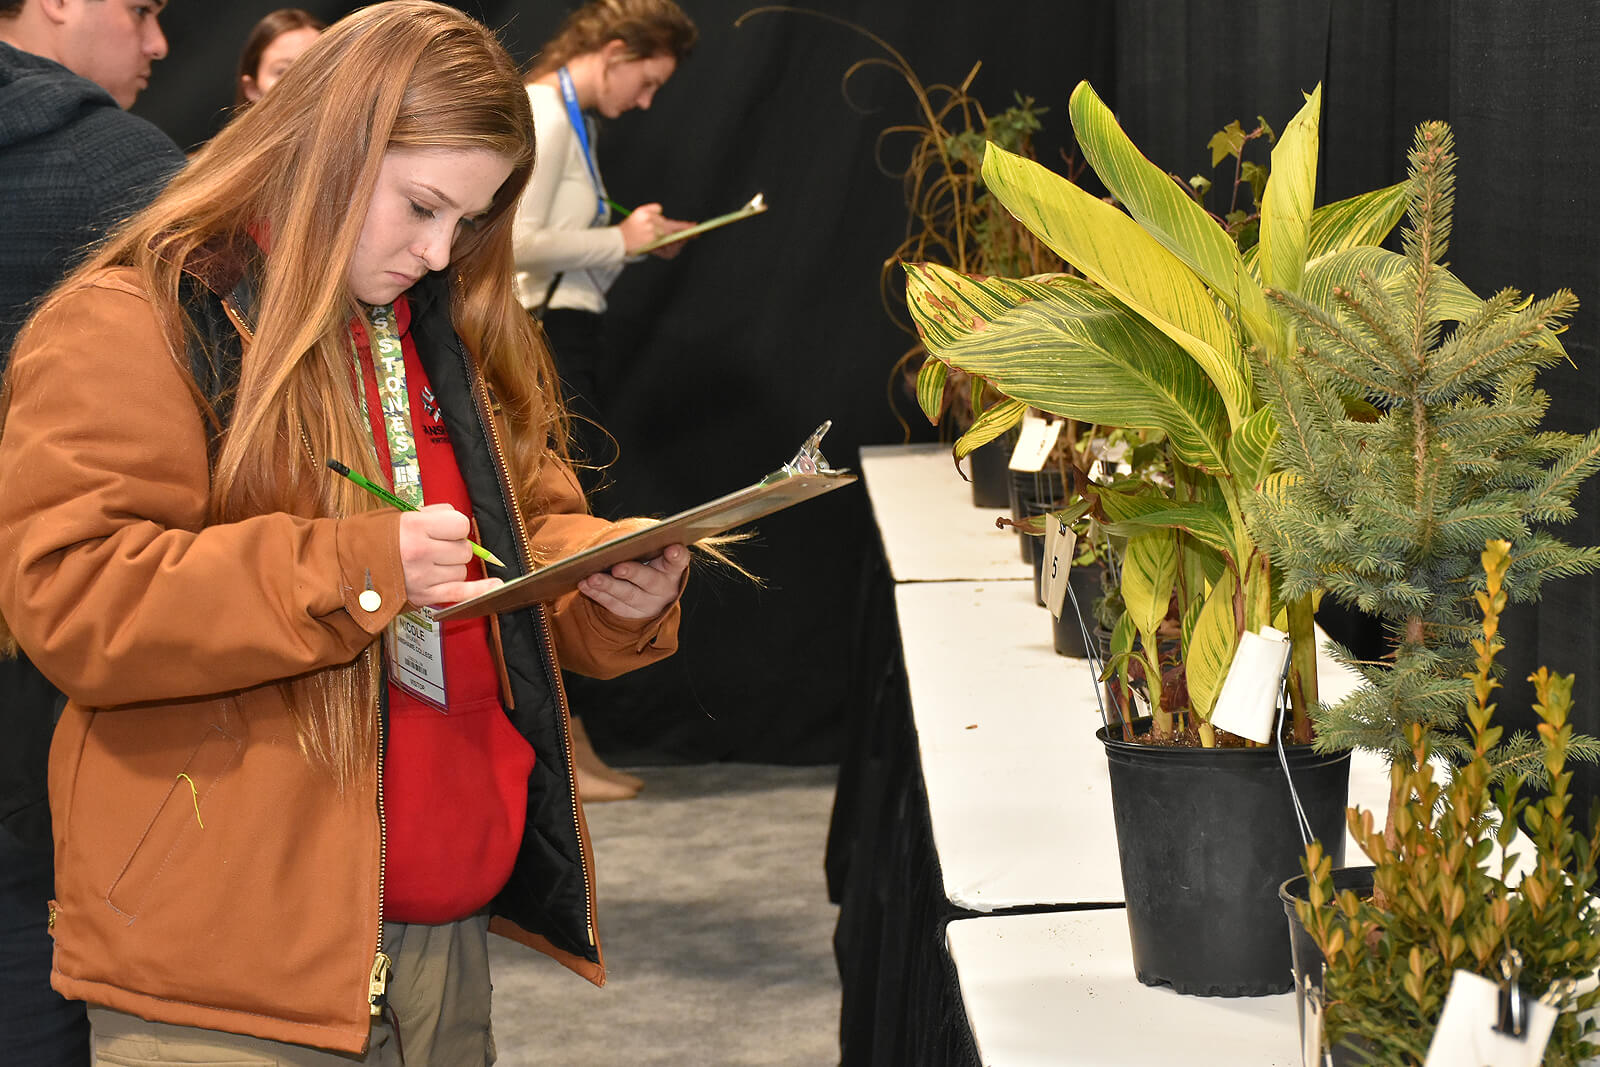 student testing plant identification skills